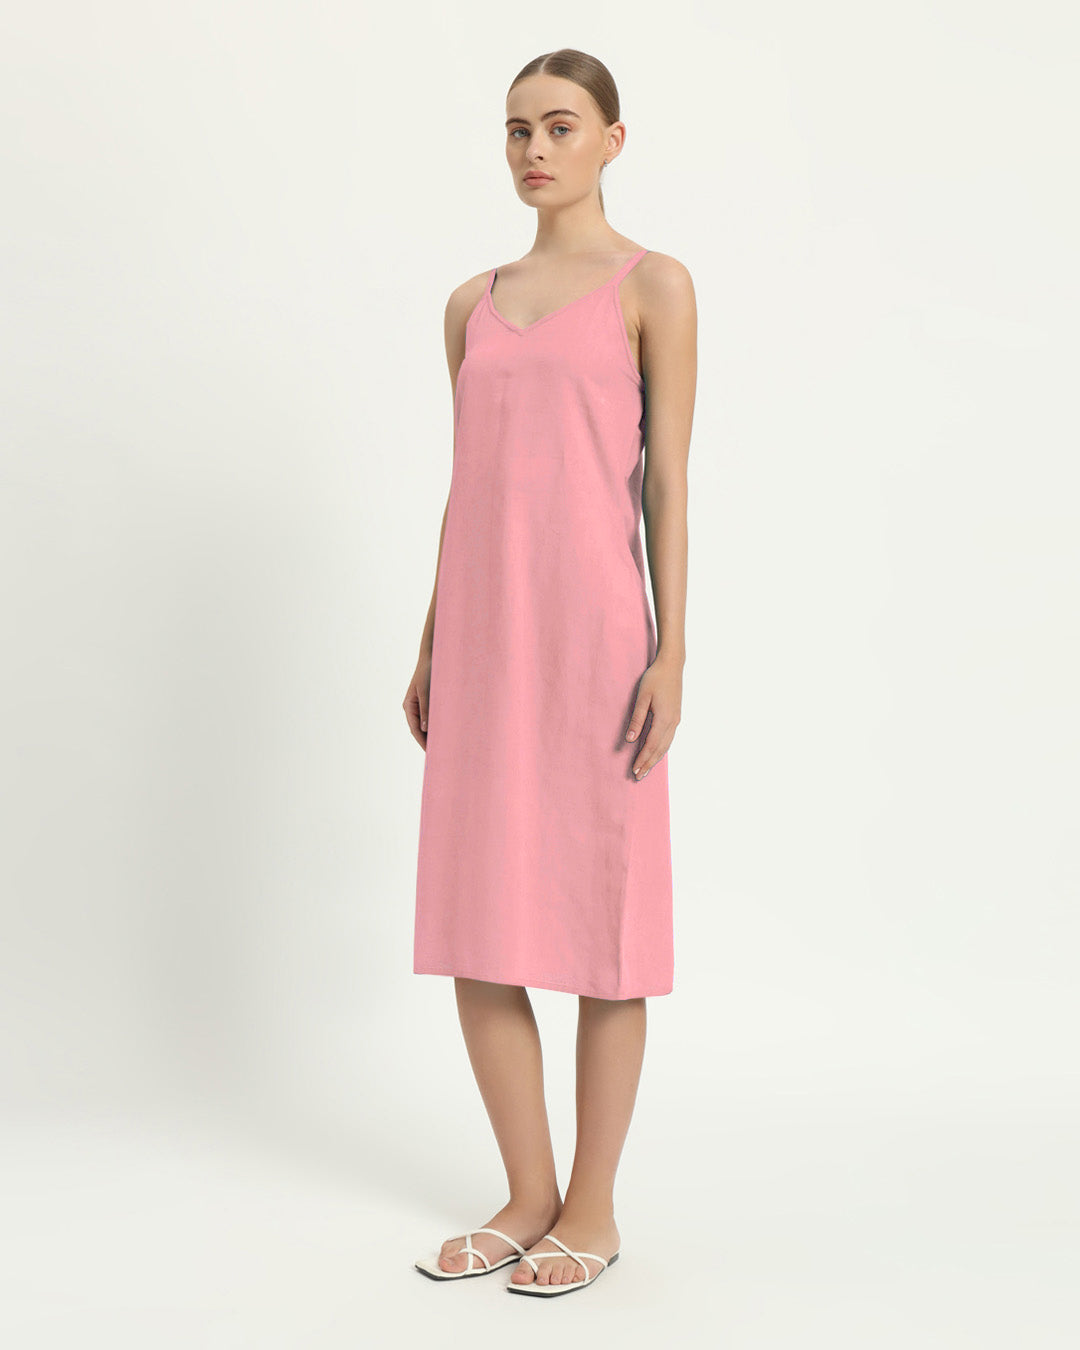 The Seesen Fondant Pink Cotton Dress